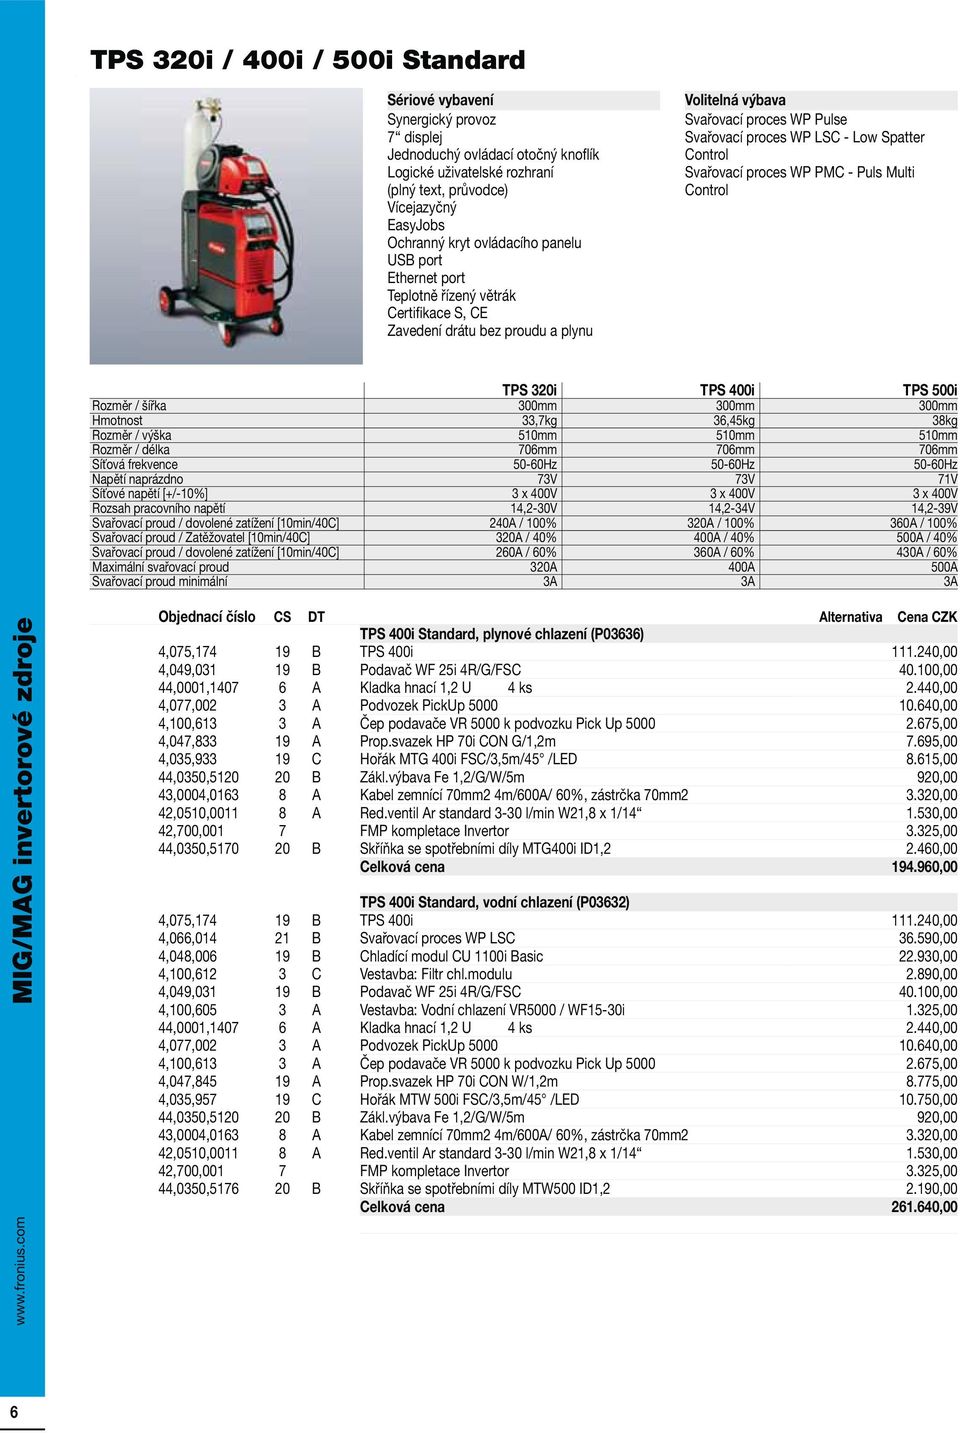 Spatter Control Svařovací proces WP PMC - Puls Multi Control TPS 320i TPS 400i TPS 500i Rozměr / šířka 300mm 300mm 300mm Hmotnost 33,7kg 36,45kg 38kg Rozměr / výška 510mm 510mm 510mm Rozměr / délka